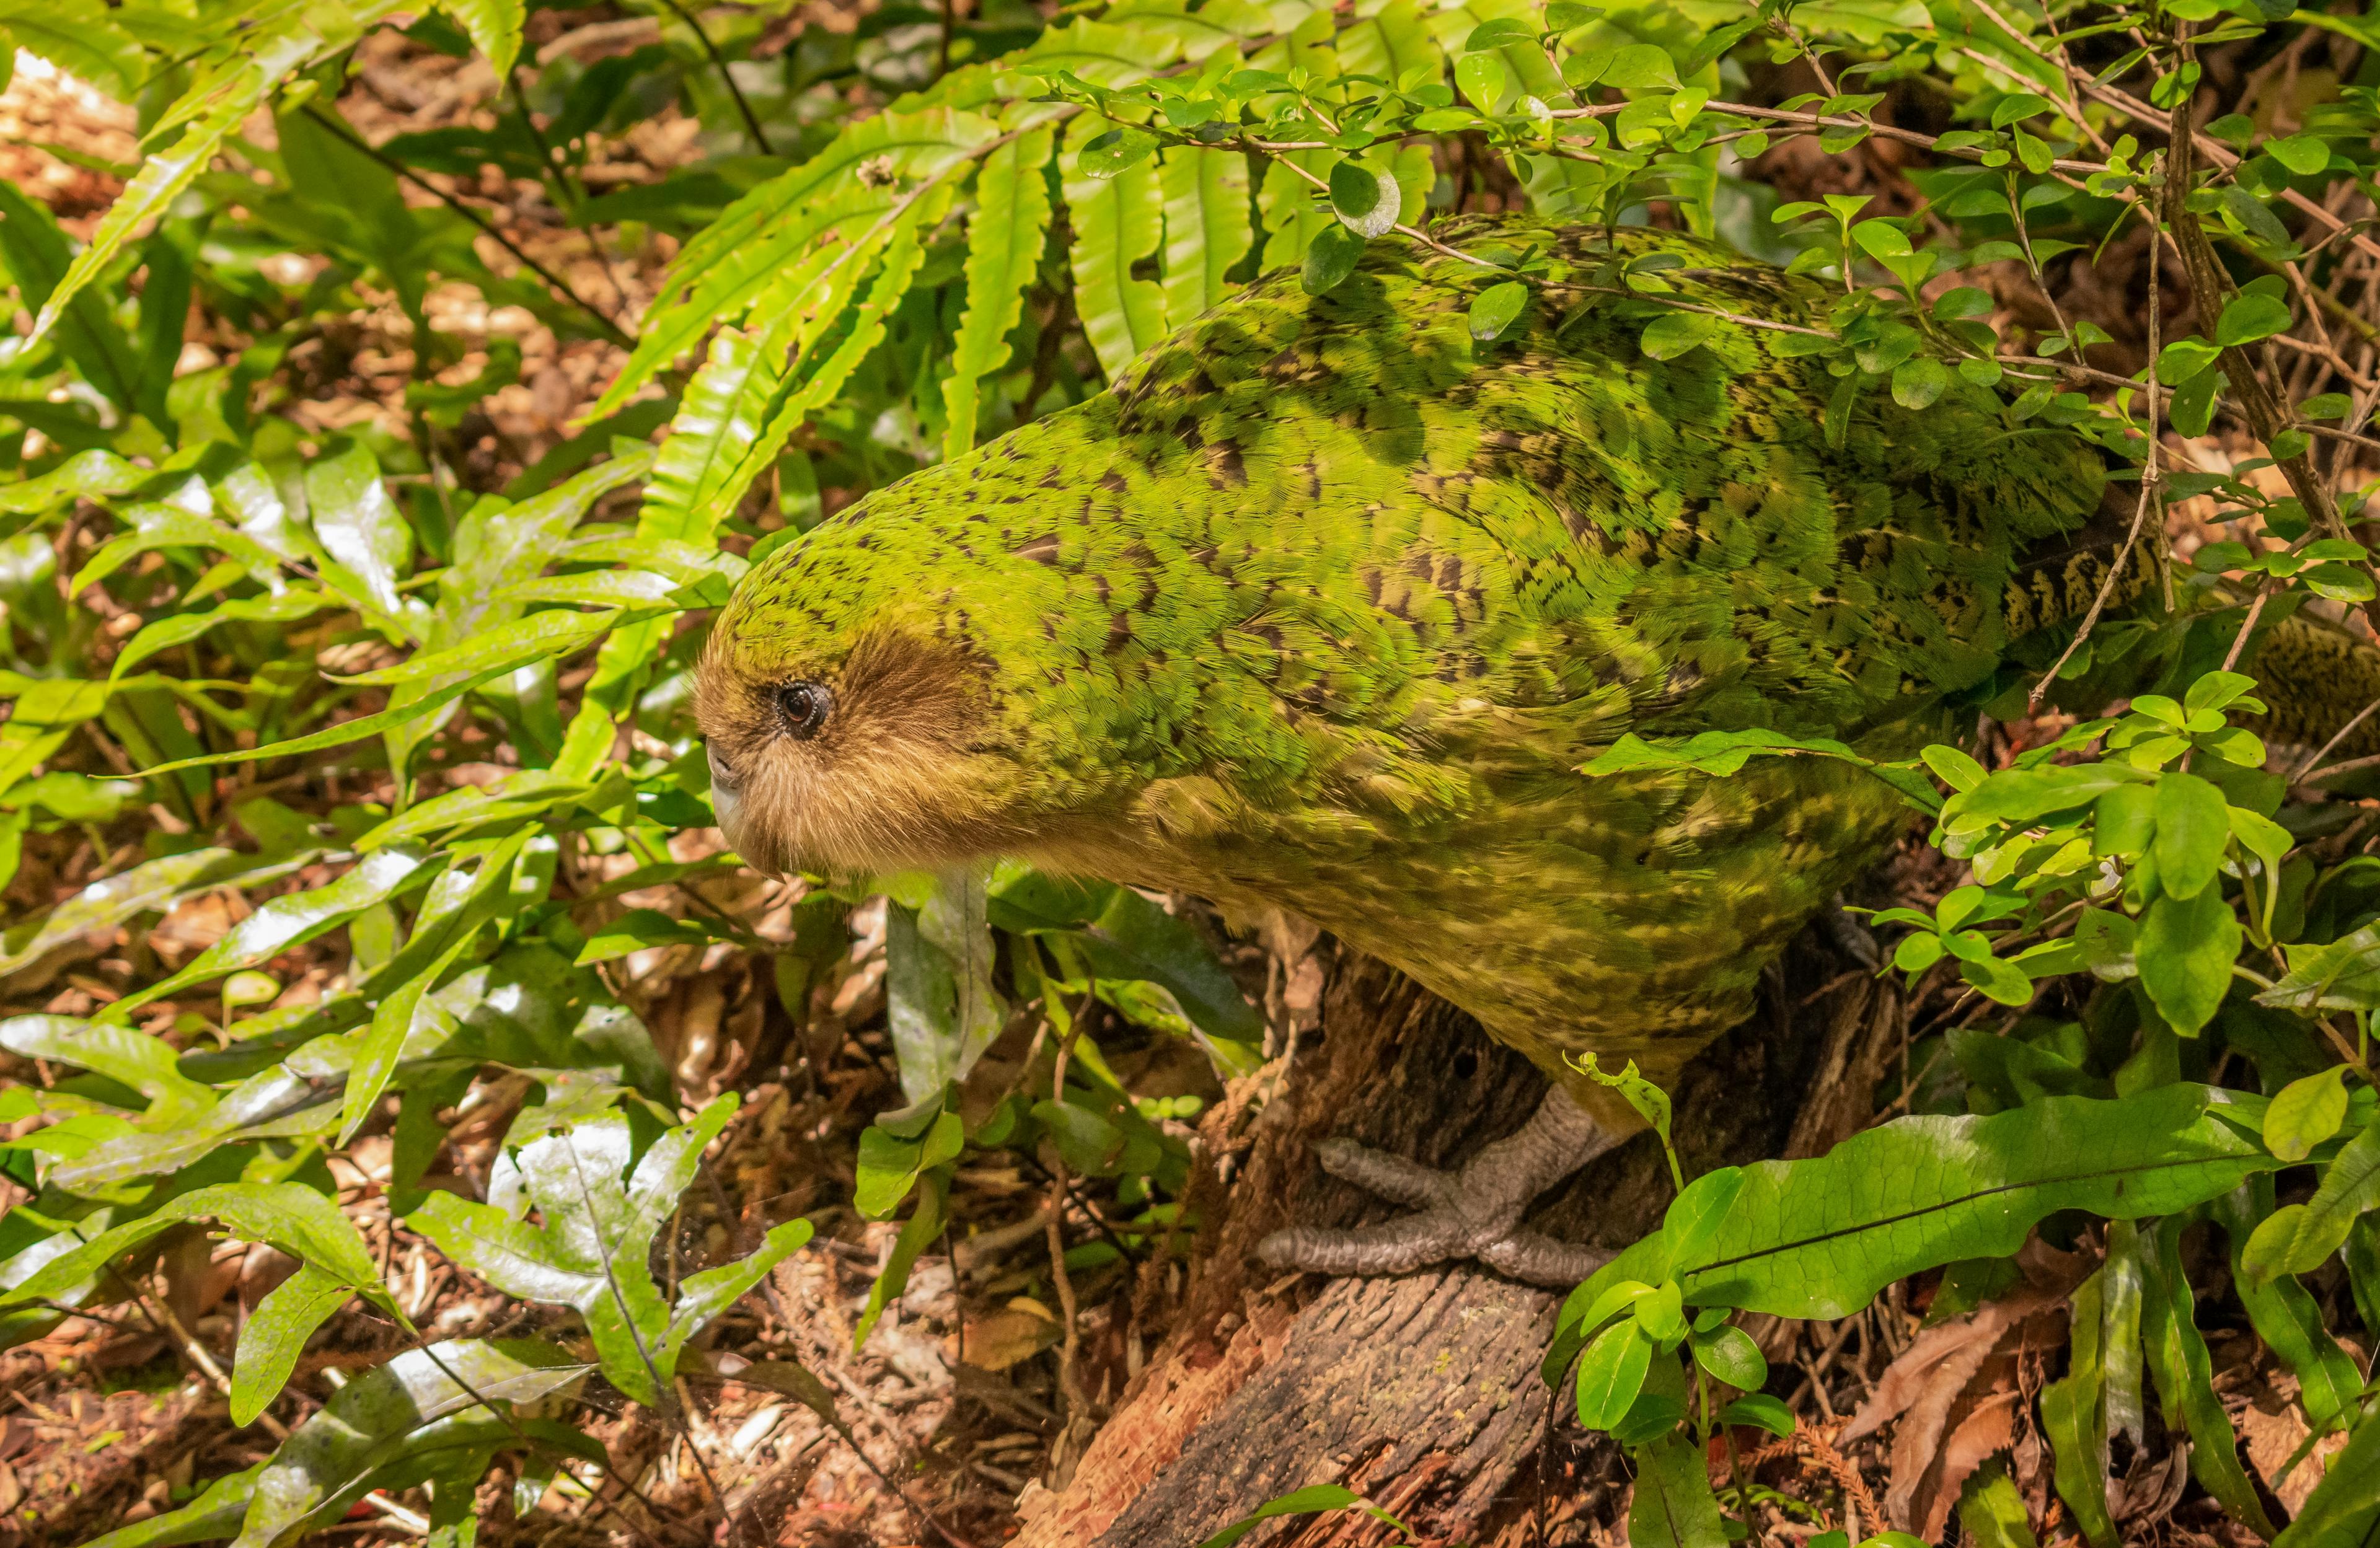 A wild evolutionary distinct and globally endangered Kakapo